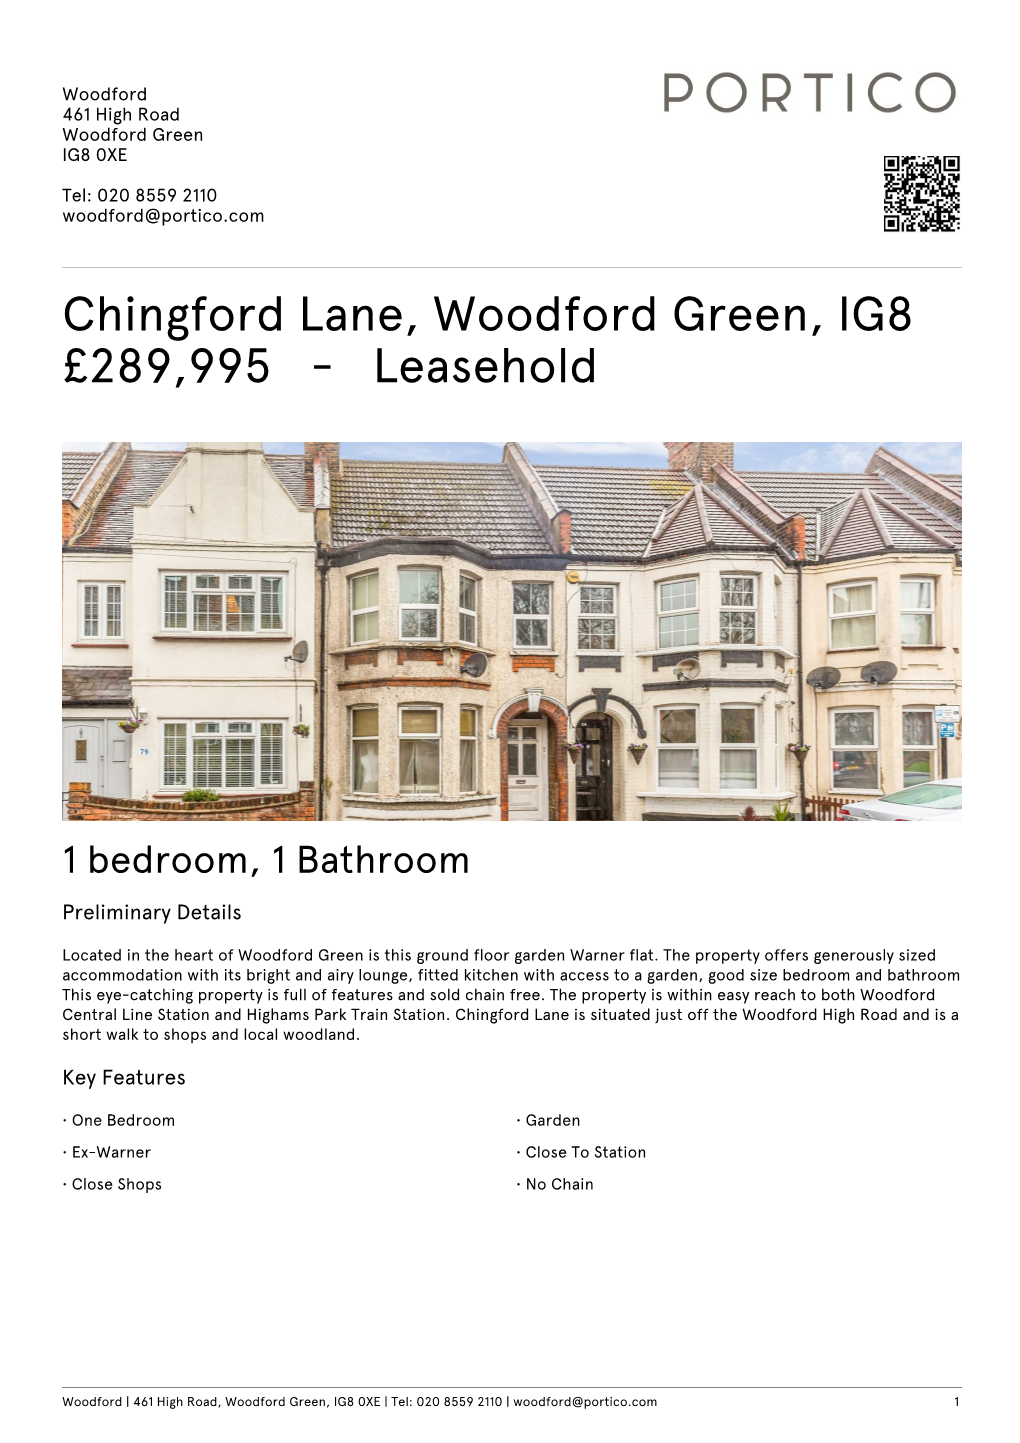 Chingford Lane, Woodford Green, IG8 £289,995